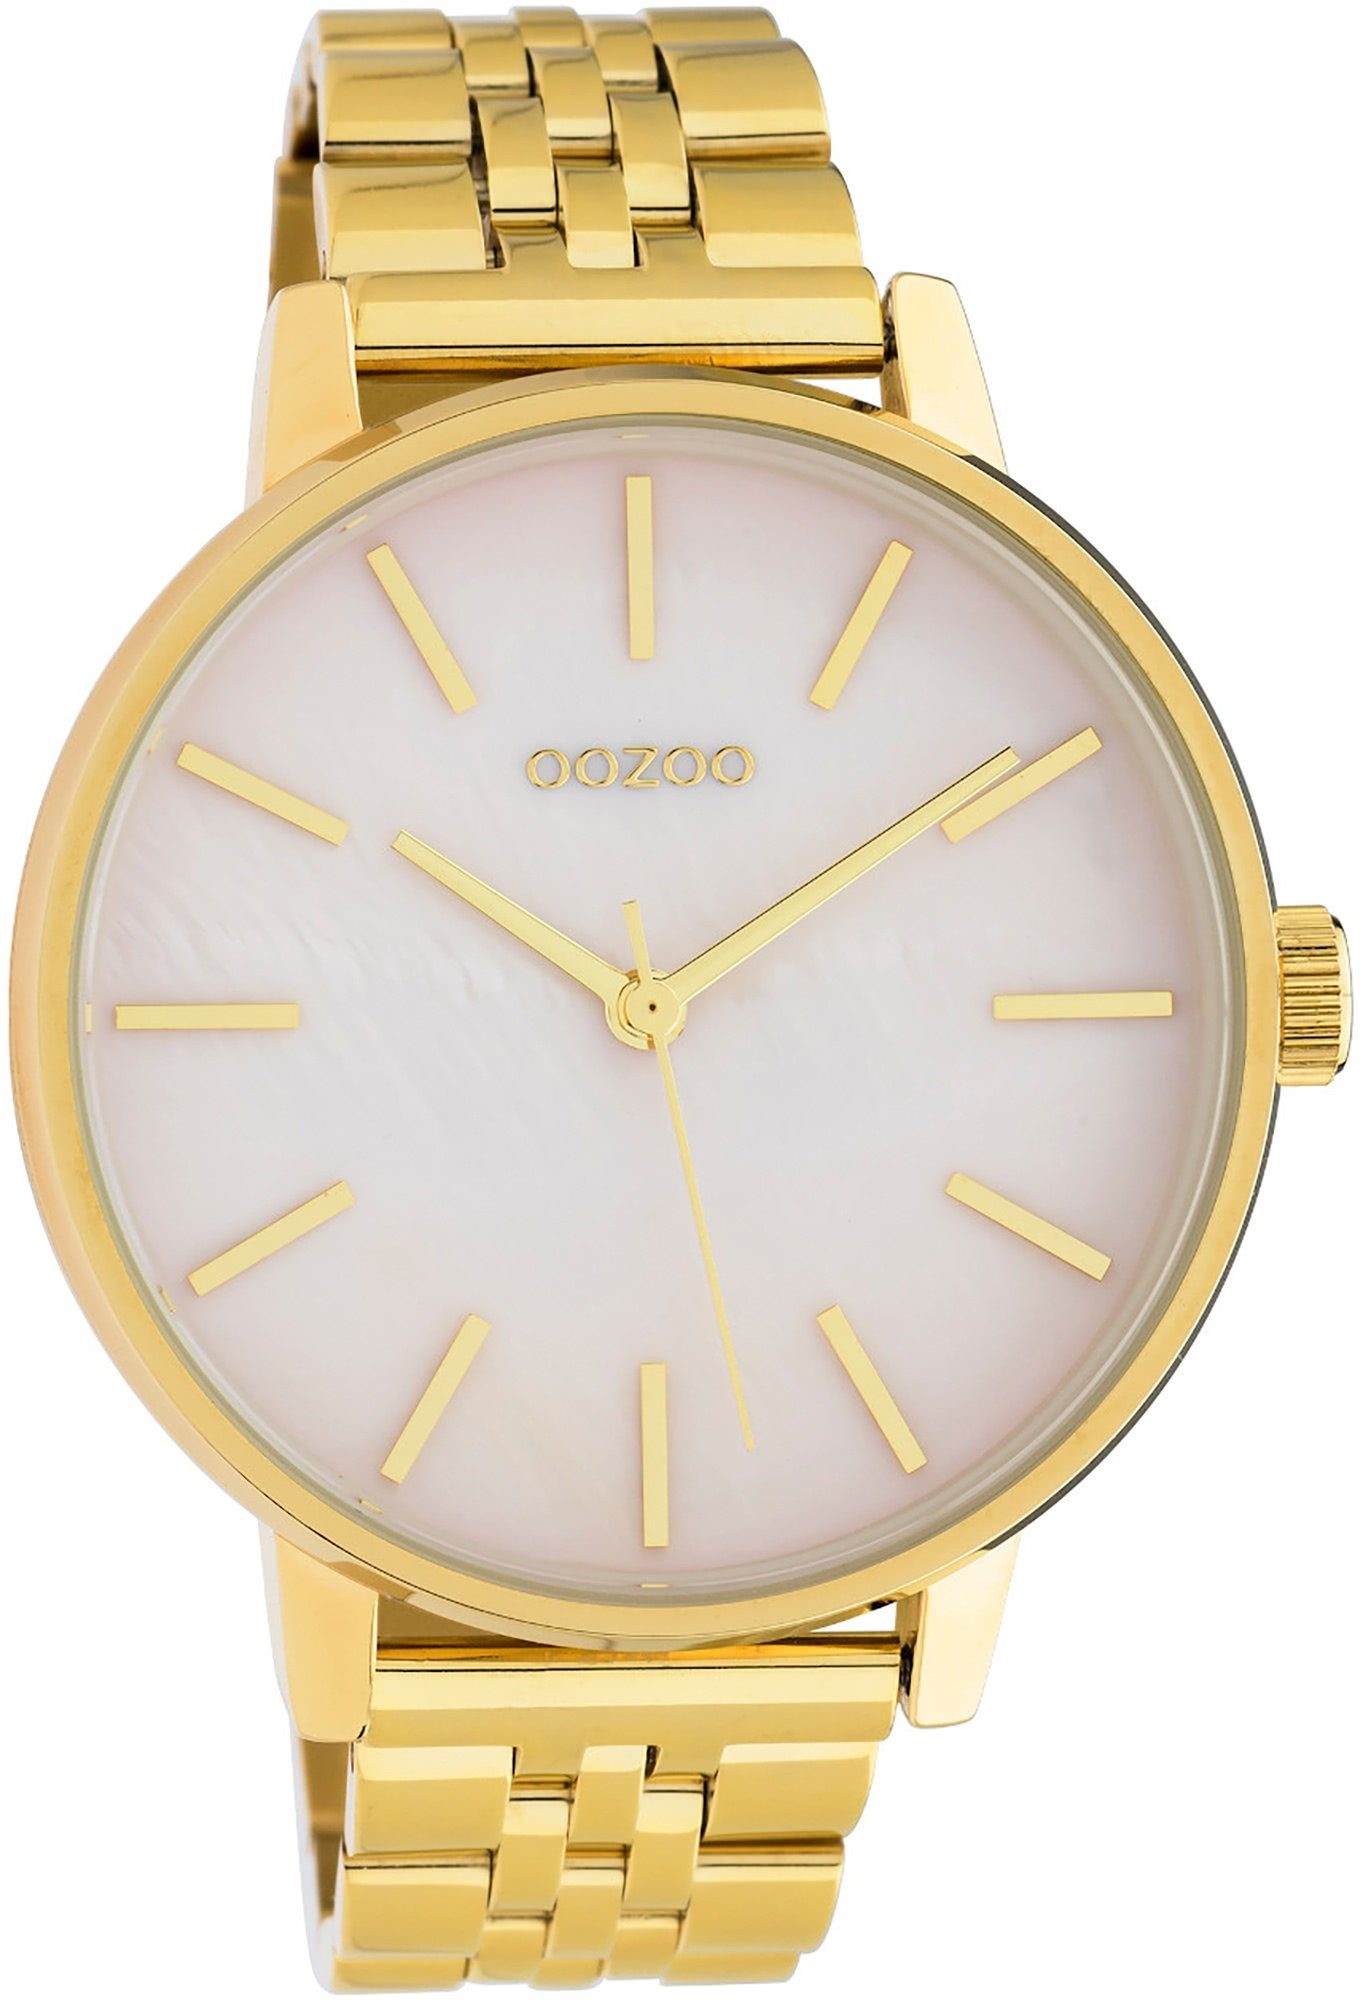 Damen (ca. Damenuhr Fashion-Style Armbanduhr rund, OOZOO Oozoo gold groß Edelstahlarmband, C10622, 40mm) Analog Quarzuhr